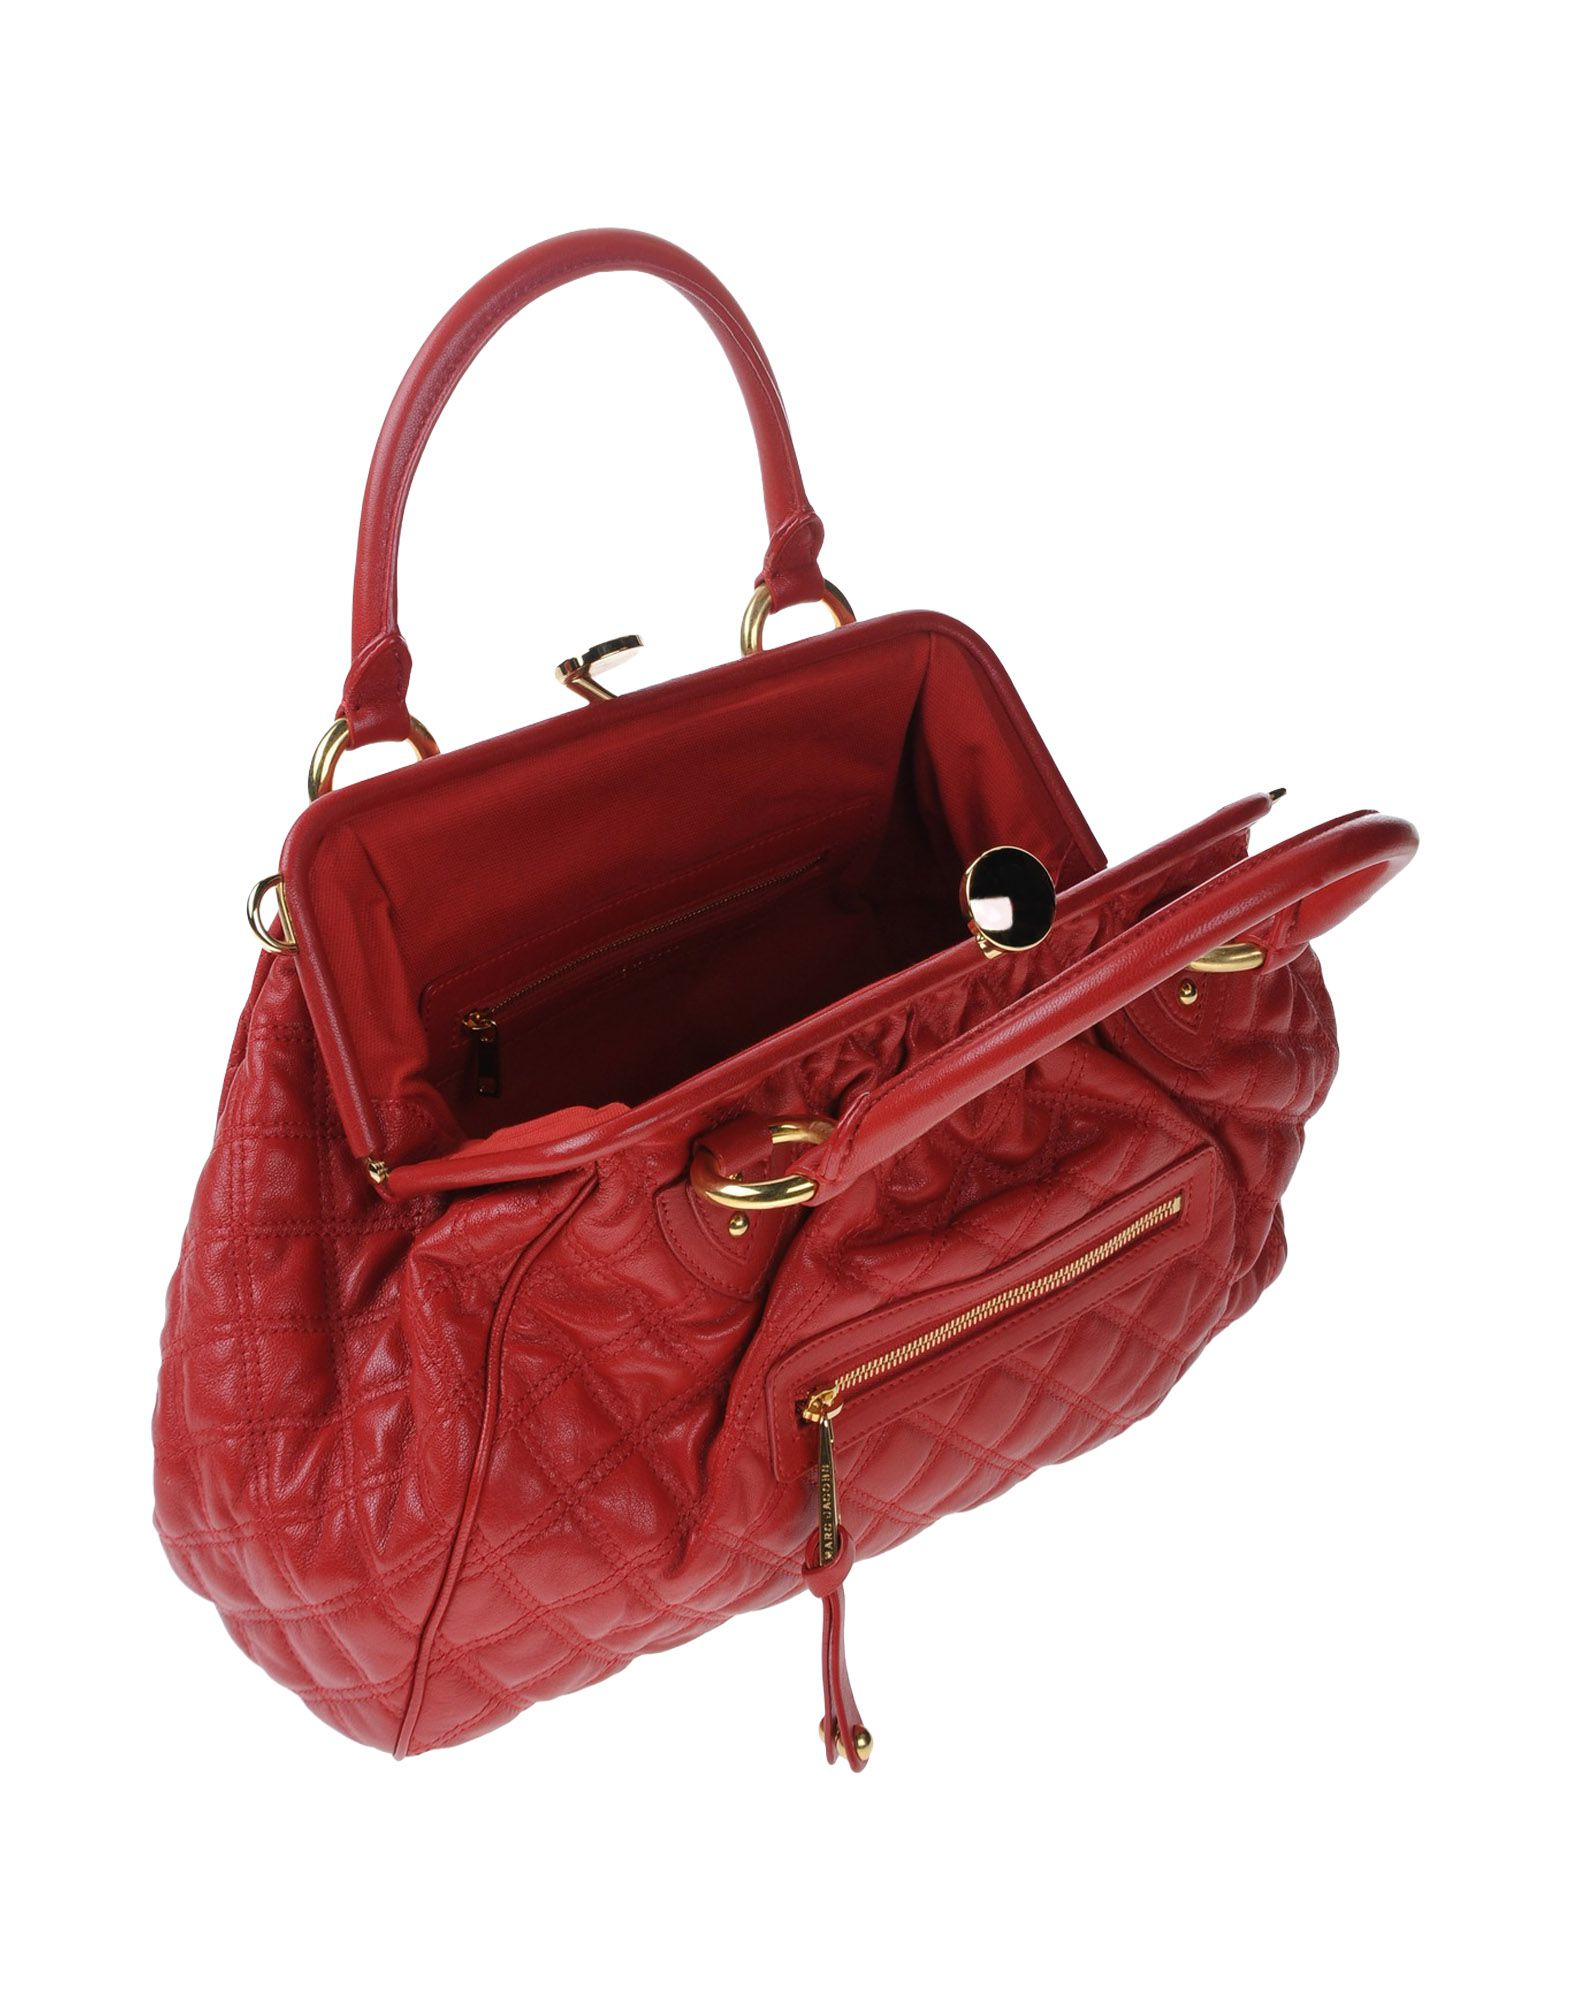 Lyst - Marc Jacobs Handbag in Red